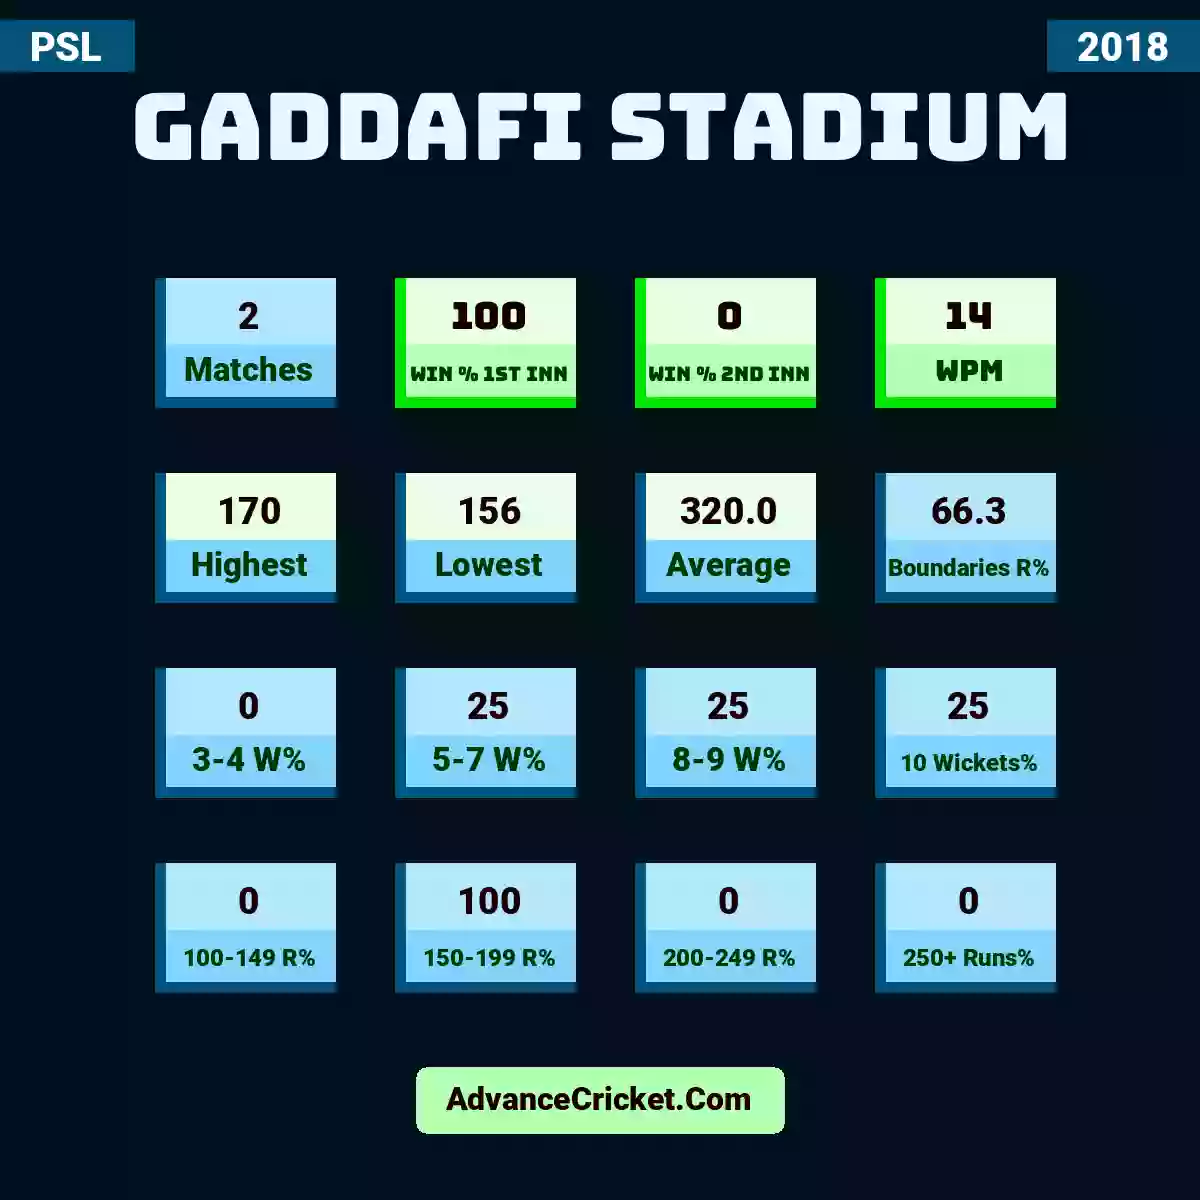 Image showing Gaddafi Stadium with Matches: 2, Win % 1st Inn: 100, Win % 2nd Inn: 0, WPM: 14, Highest: 170, Lowest: 156, Average: 320.0, Boundaries R%: 66.3, 3-4 W%: 0, 5-7 W%: 25, 8-9 W%: 25, 10 Wickets%: 25, 100-149 R%: 0, 150-199 R%: 100, 200-249 R%: 0, 250+ Runs%: 0.